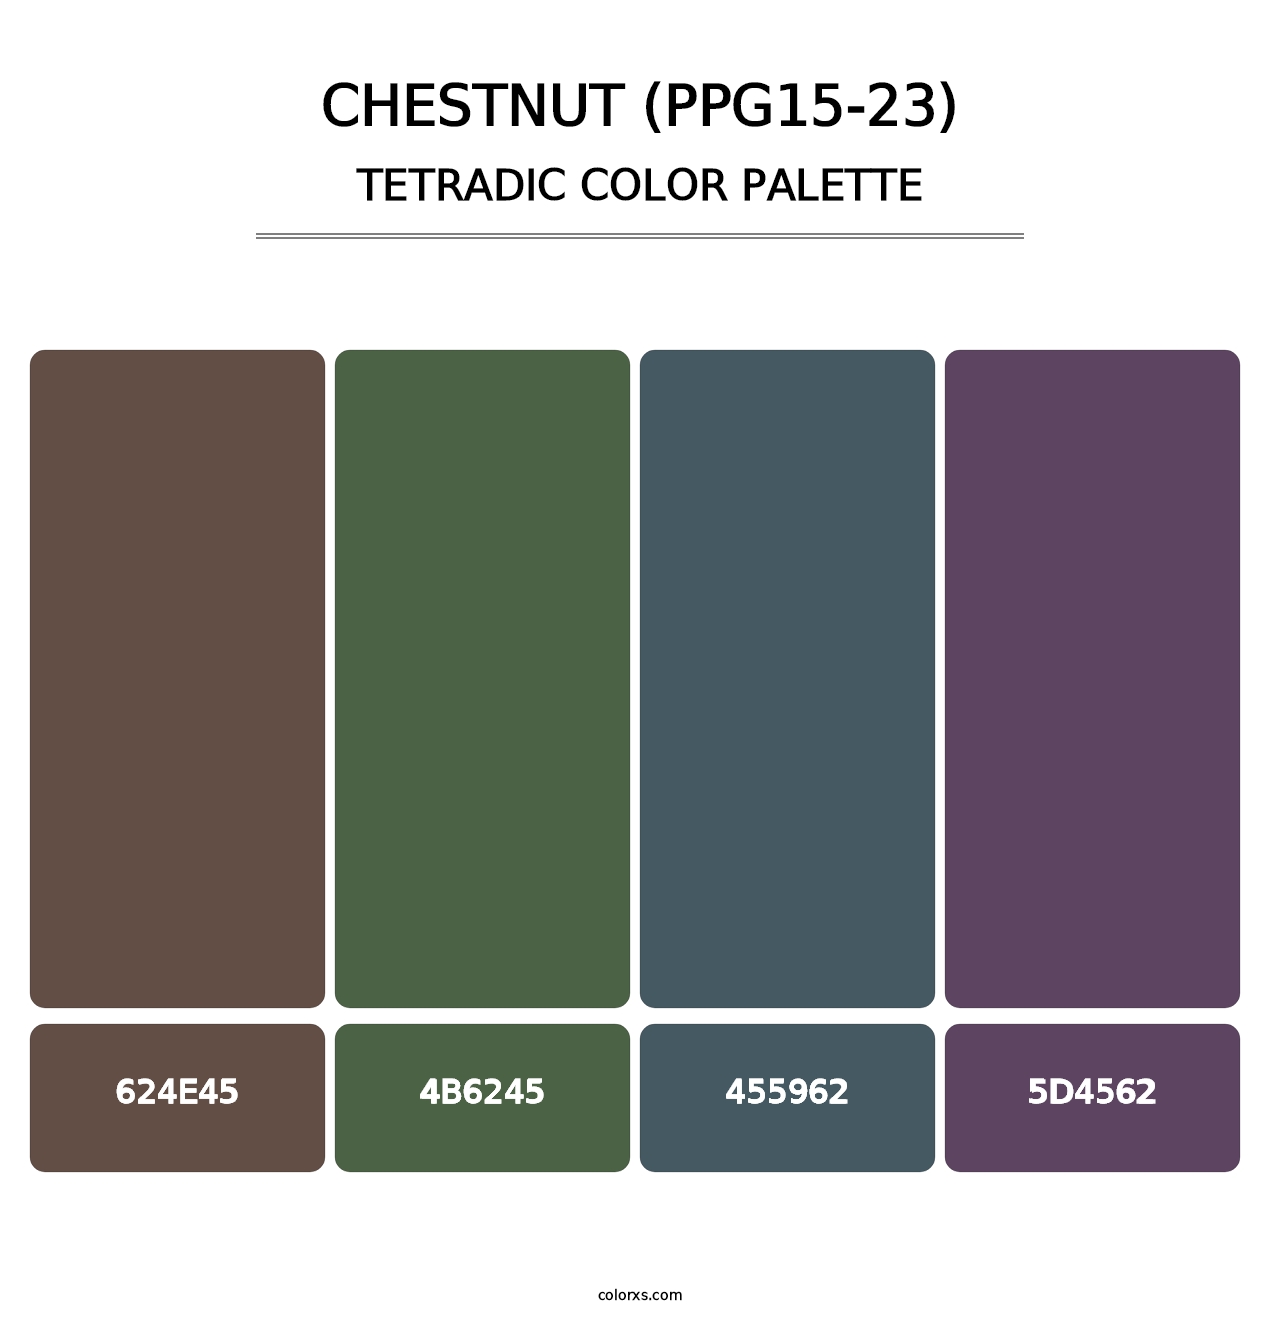 Chestnut (PPG15-23) - Tetradic Color Palette